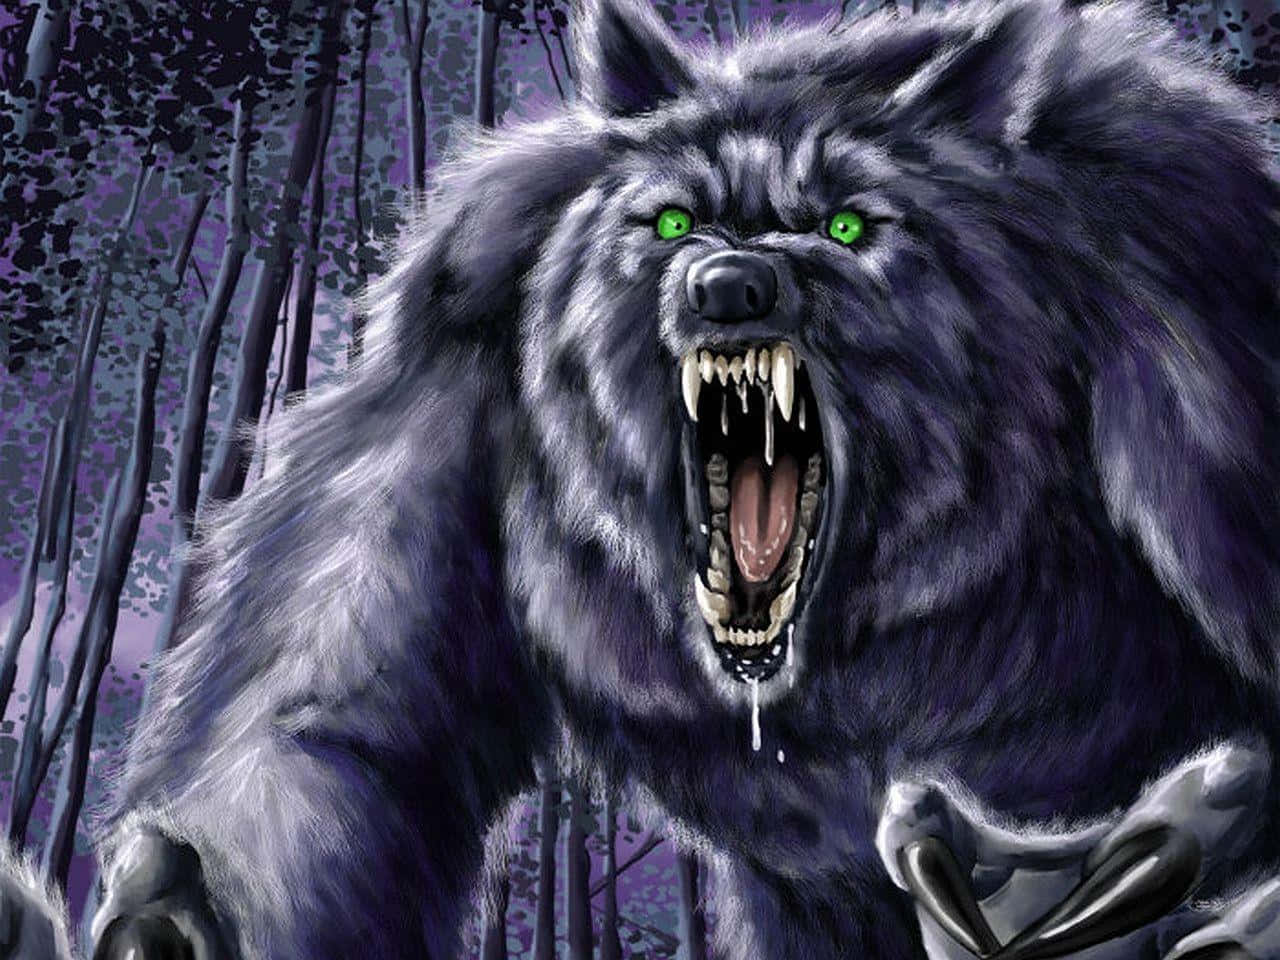 "Thrilling Transformation into a Werewolf"